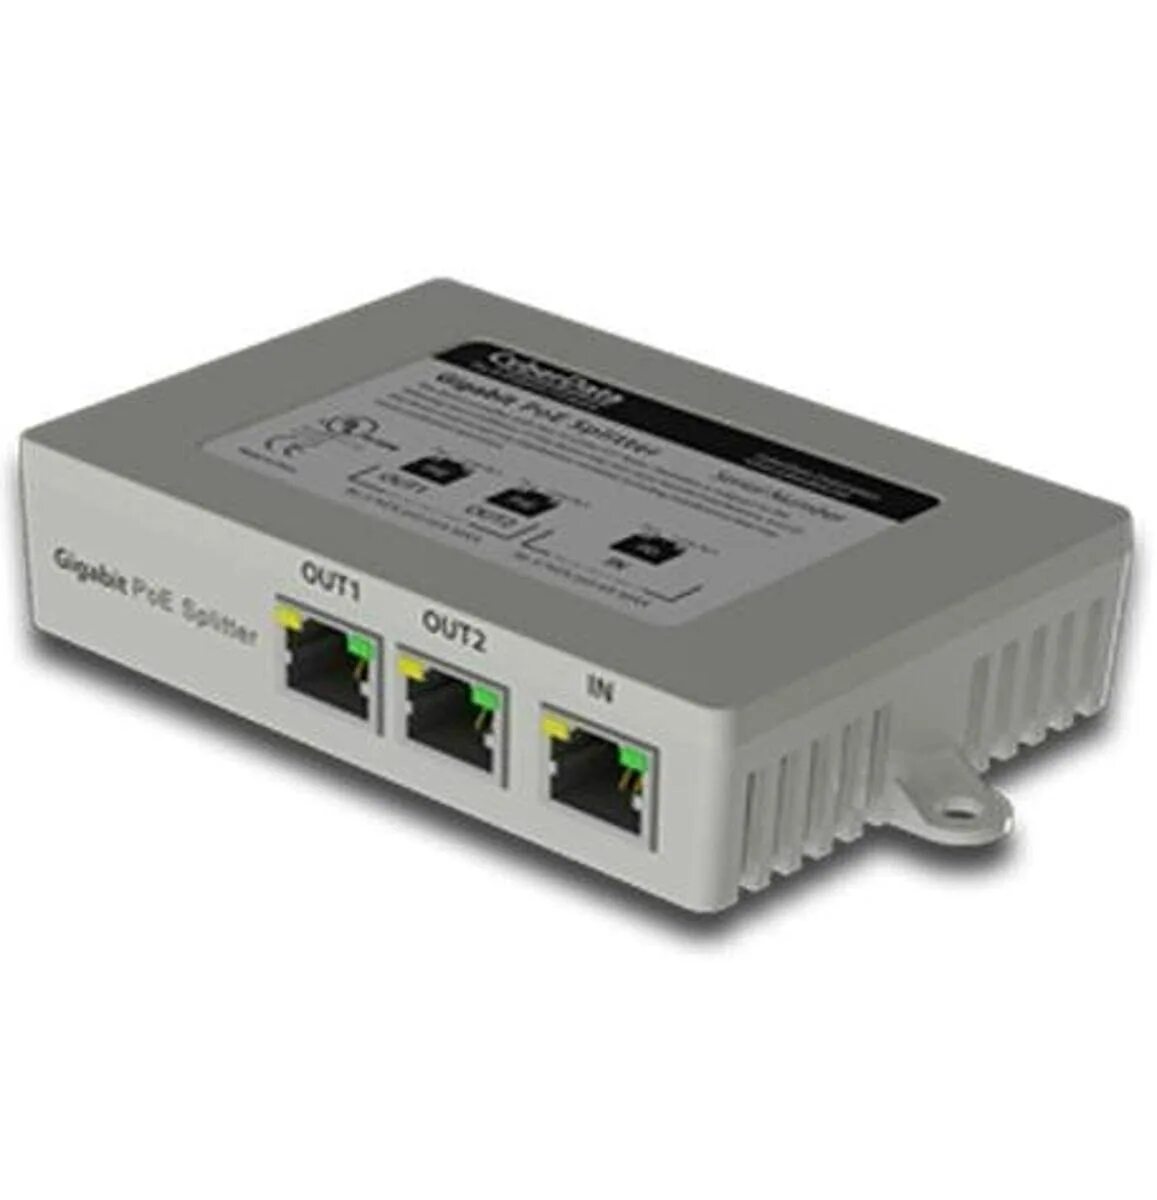 Poe gigabit. POE коммутатор на 2 порта. Коммутатор 2 порта Ethernet. Свитч 3 порта. POE Switch 2 Port.